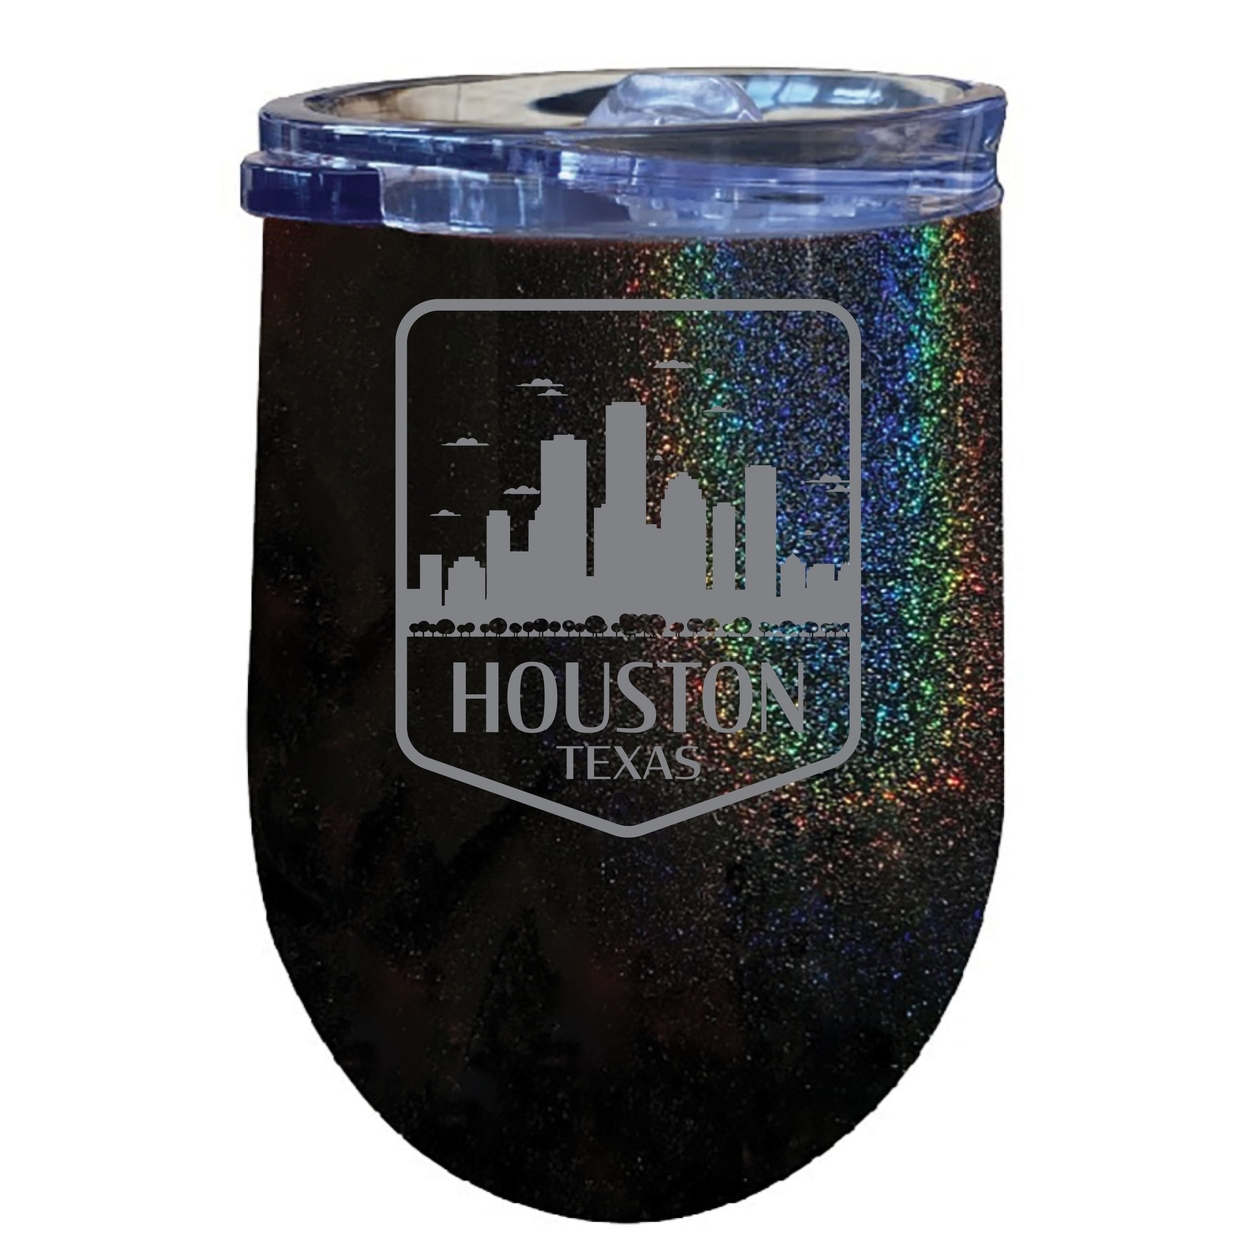 Houston Texas Souvenir 12 Oz Engraved Insulated Wine Stainless Steel Tumbler - White,,2-Pack